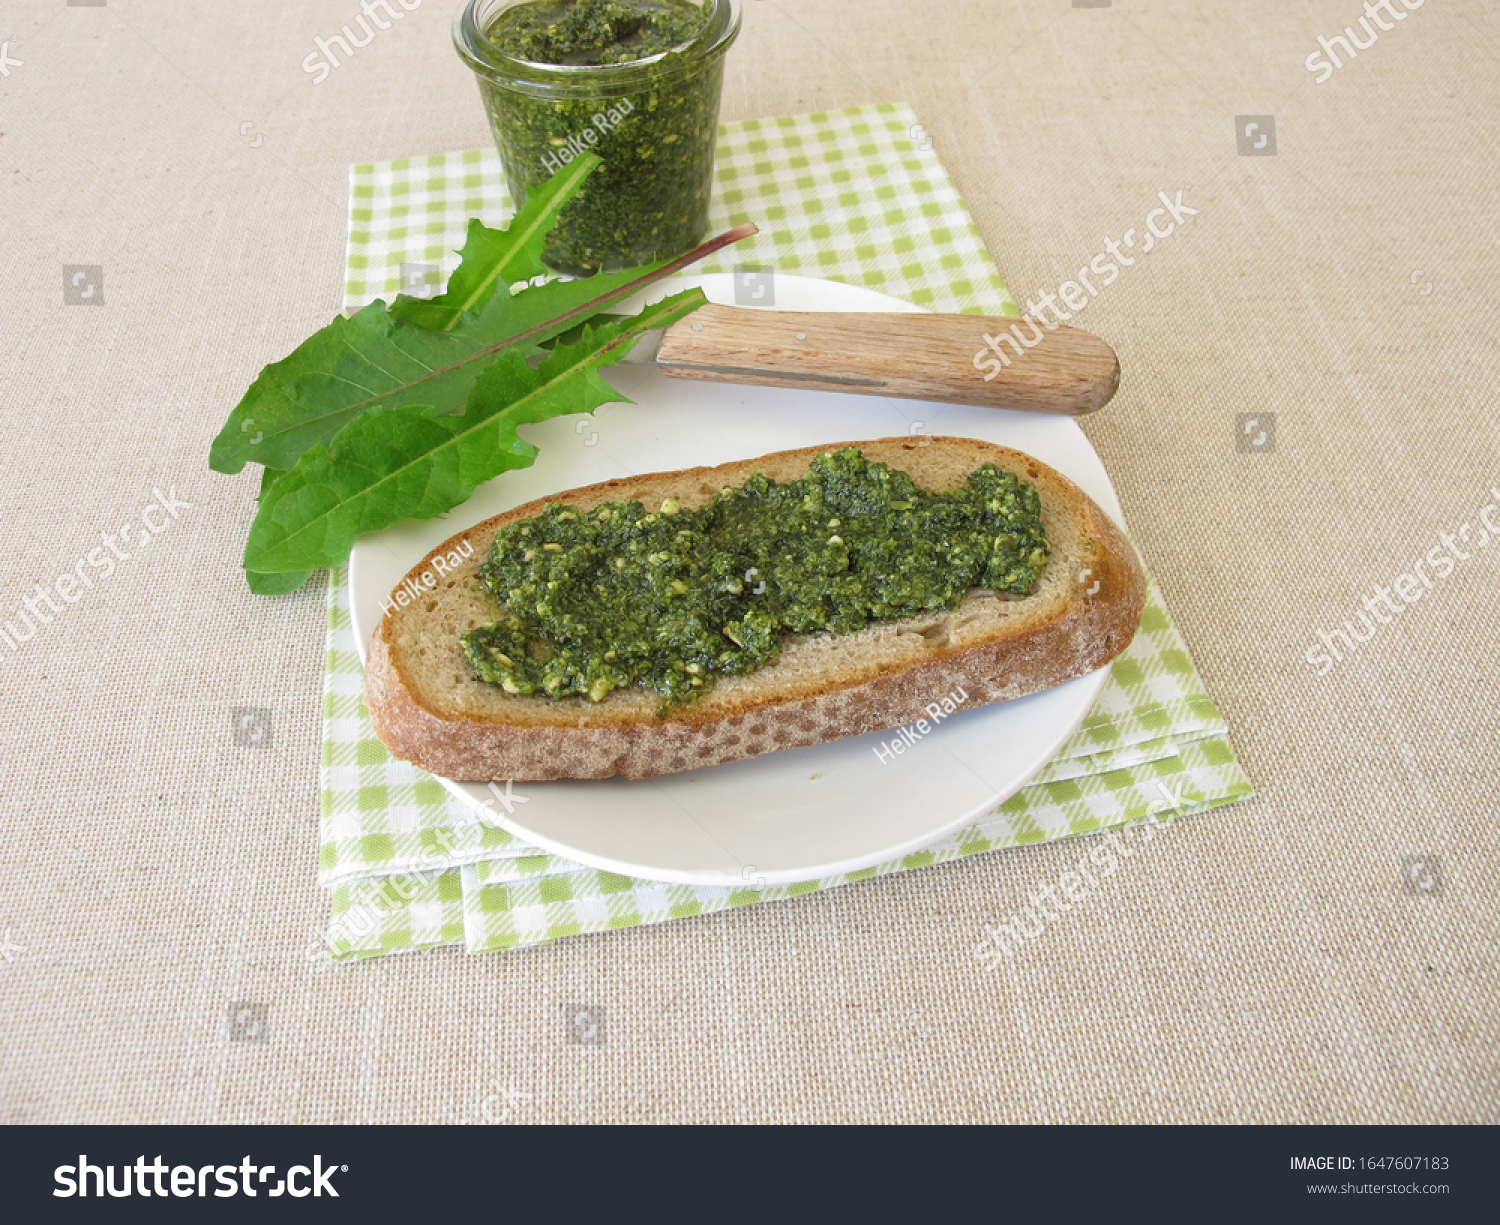 Dandelion pesto, green pesto with dandelion on a slice of bread #1647607183